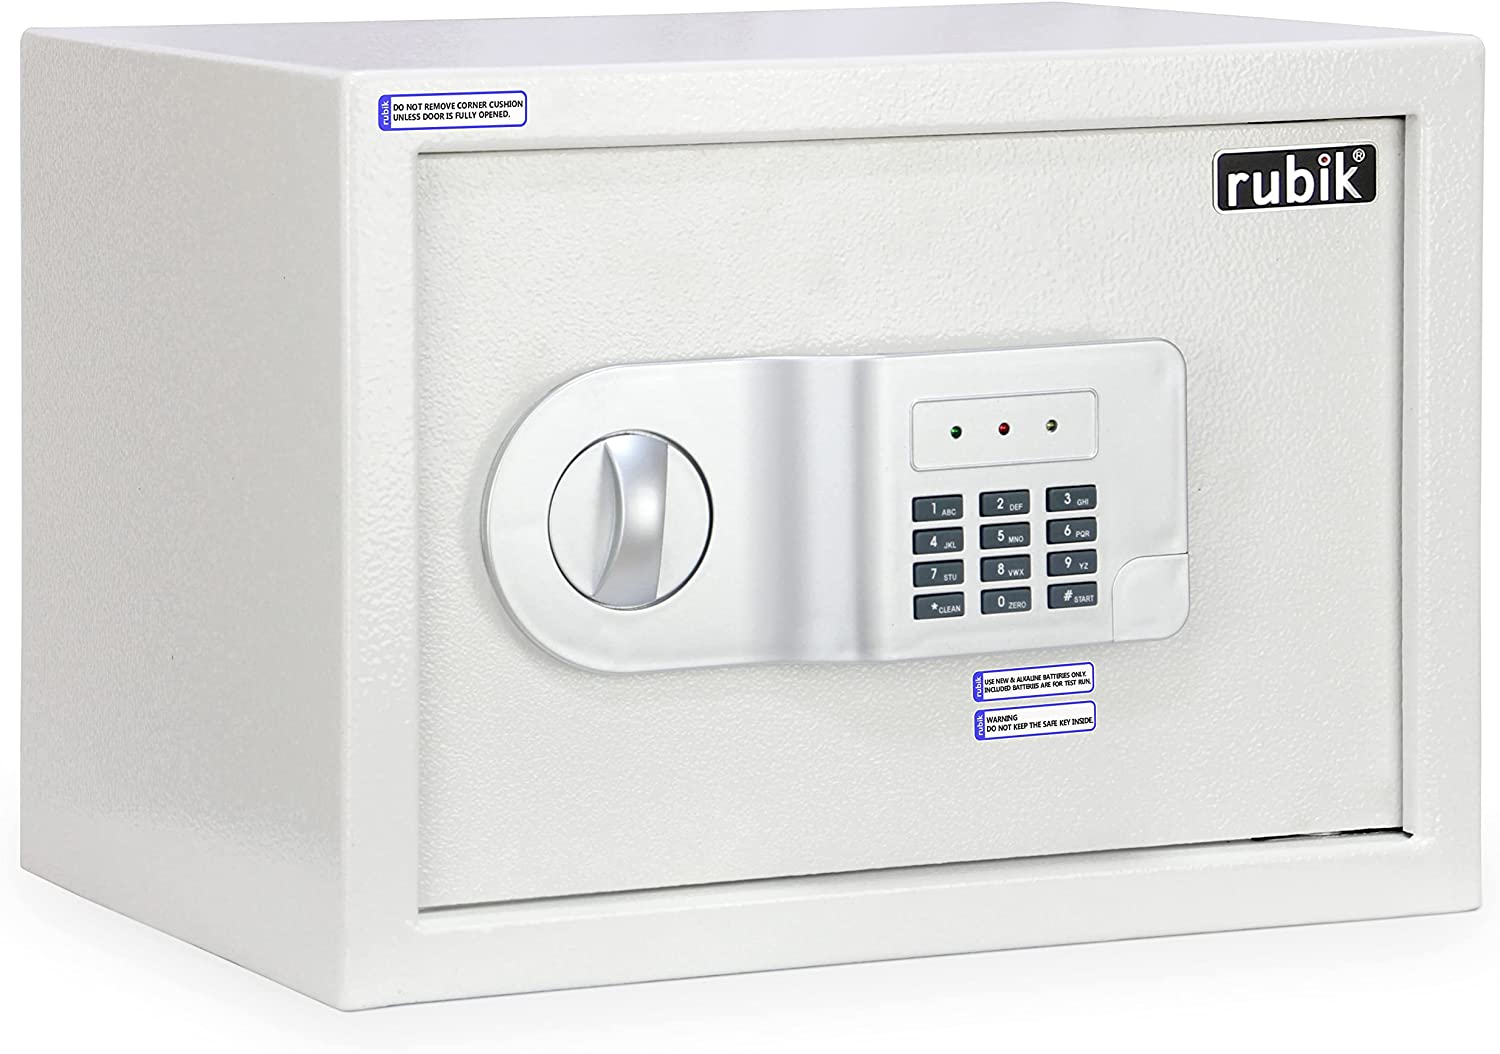 Rubik Safe Box A4 Document Size Locker Security Safety Deposit With Key And Keyless Entry, RB25AJ, (35X25X25Cm) White